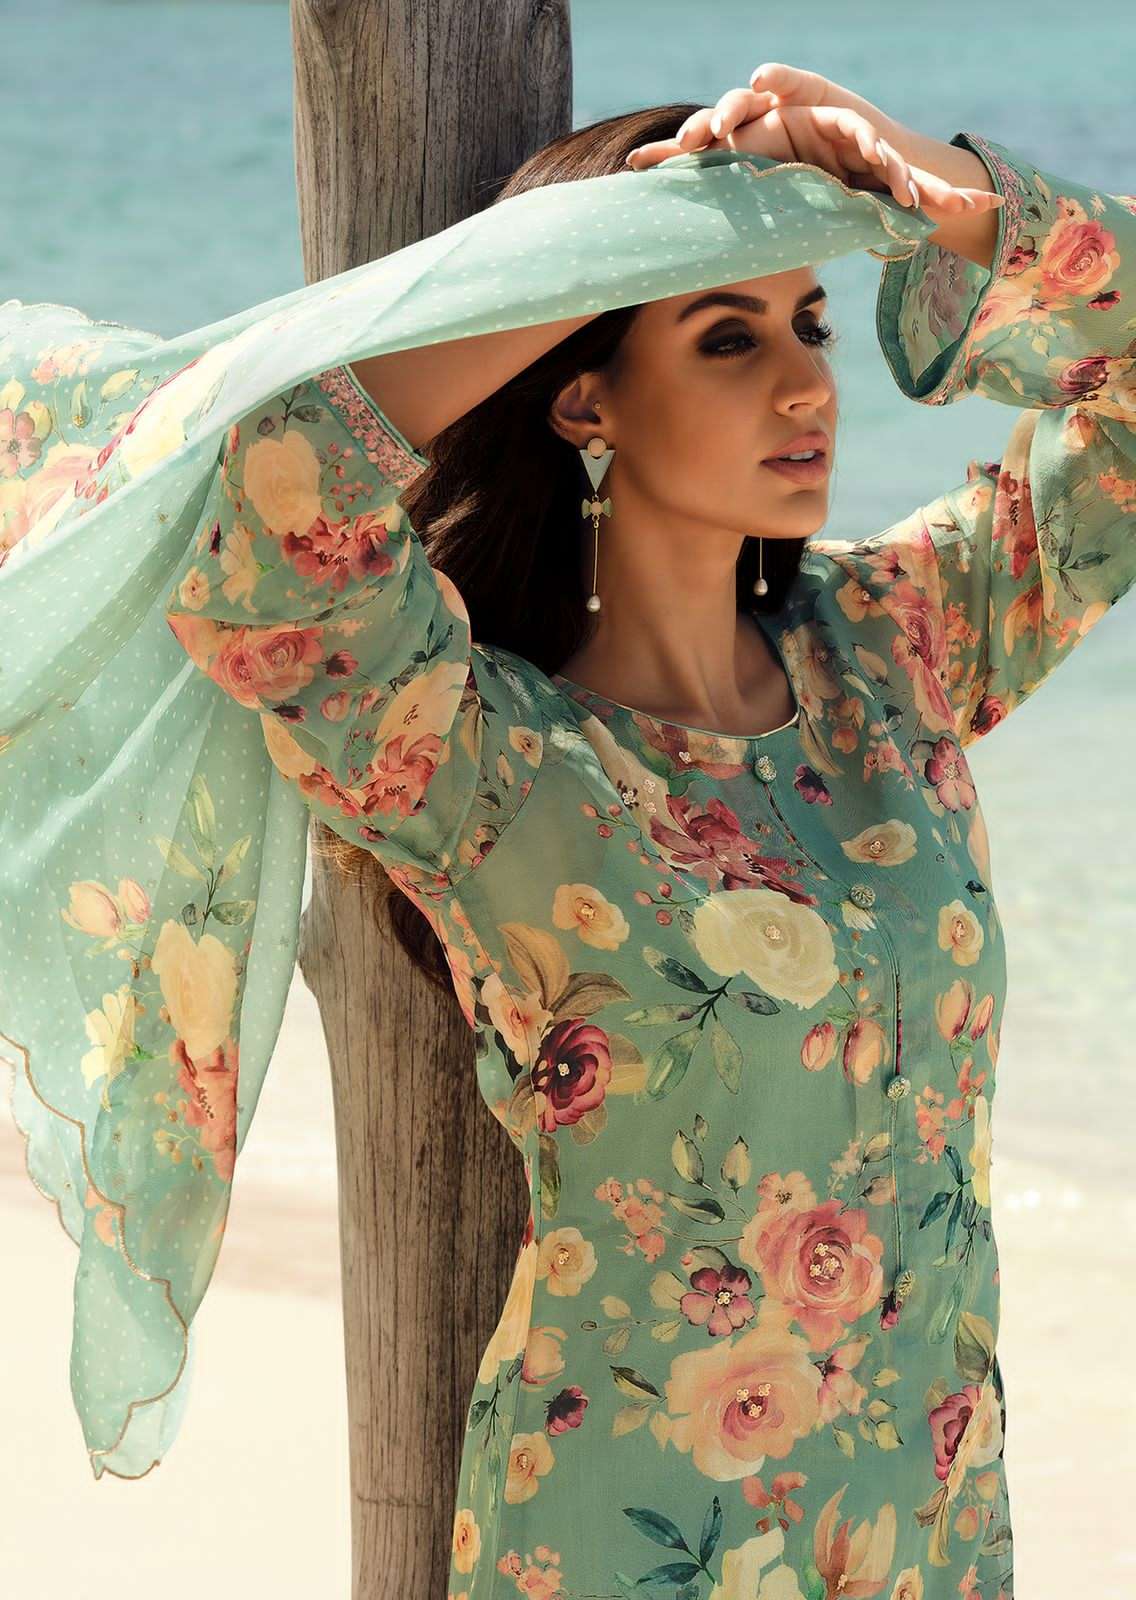 varsha fashion orchid 01-06 series exclusive designer salwar kameez at best price surat 